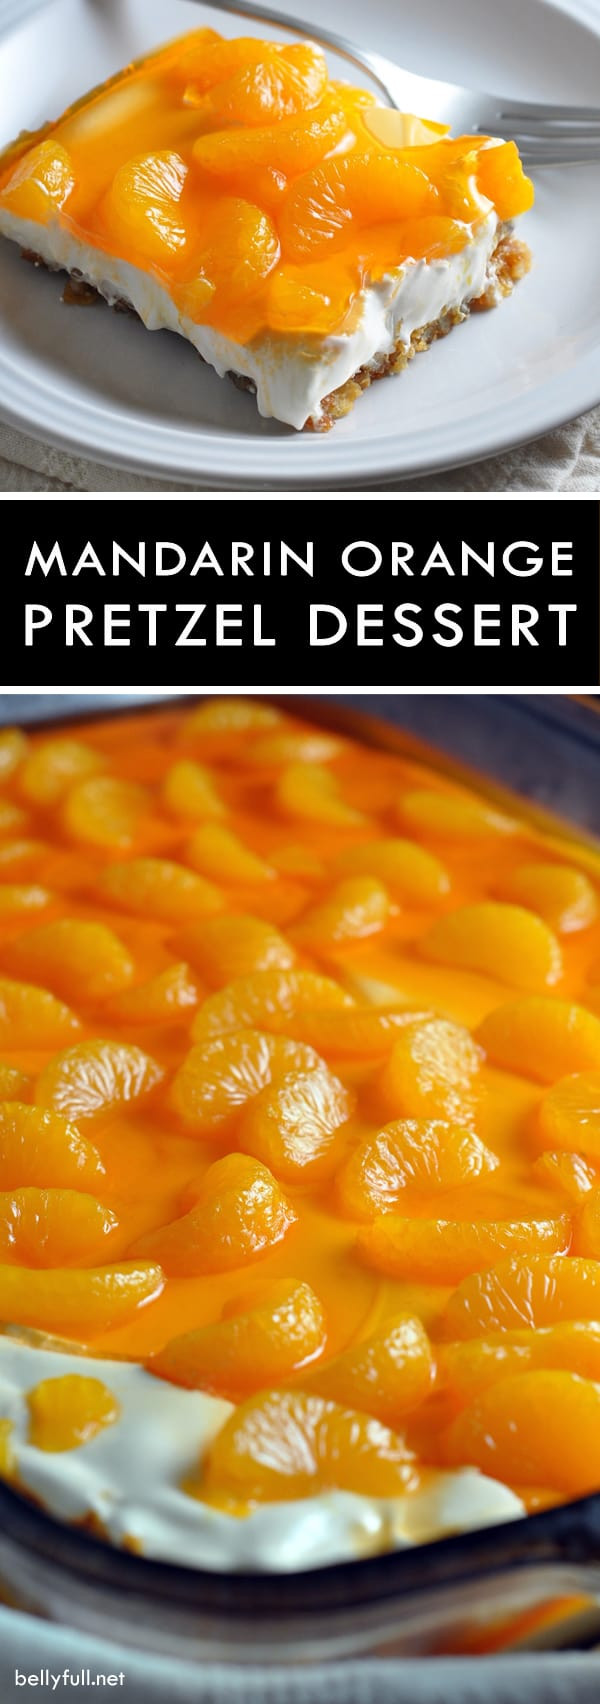 Mandarin Orange Jello Dessert
 Mandarin Orange Pretzel Dessert